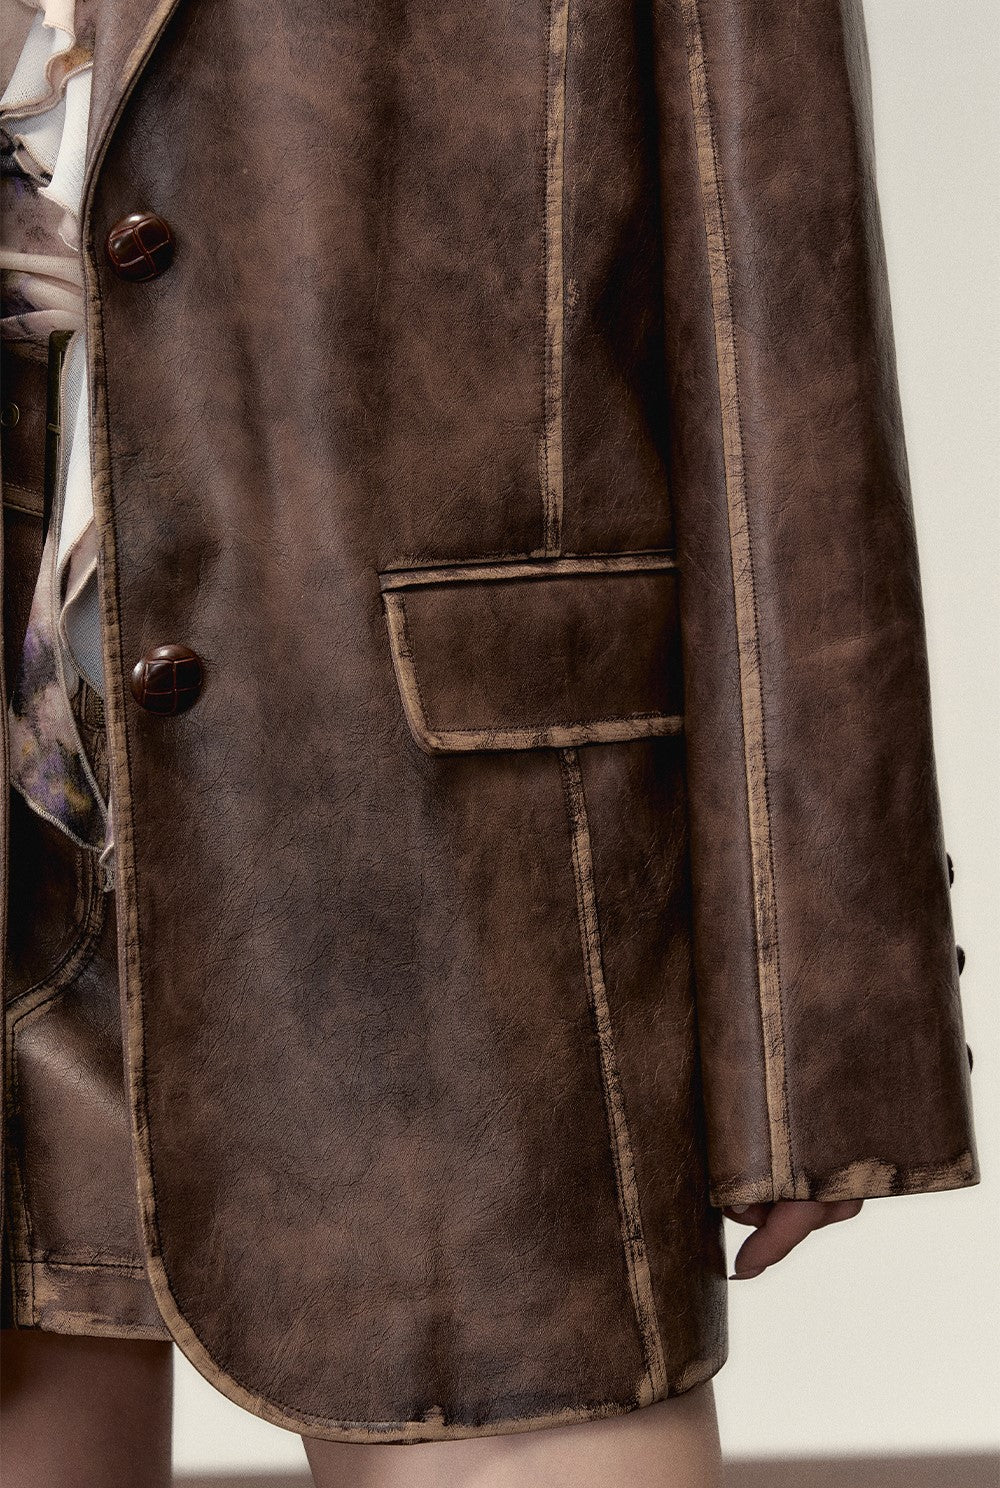 Retro Lapel Boyfriend Style Leather Jacket/Skirt VIA0048